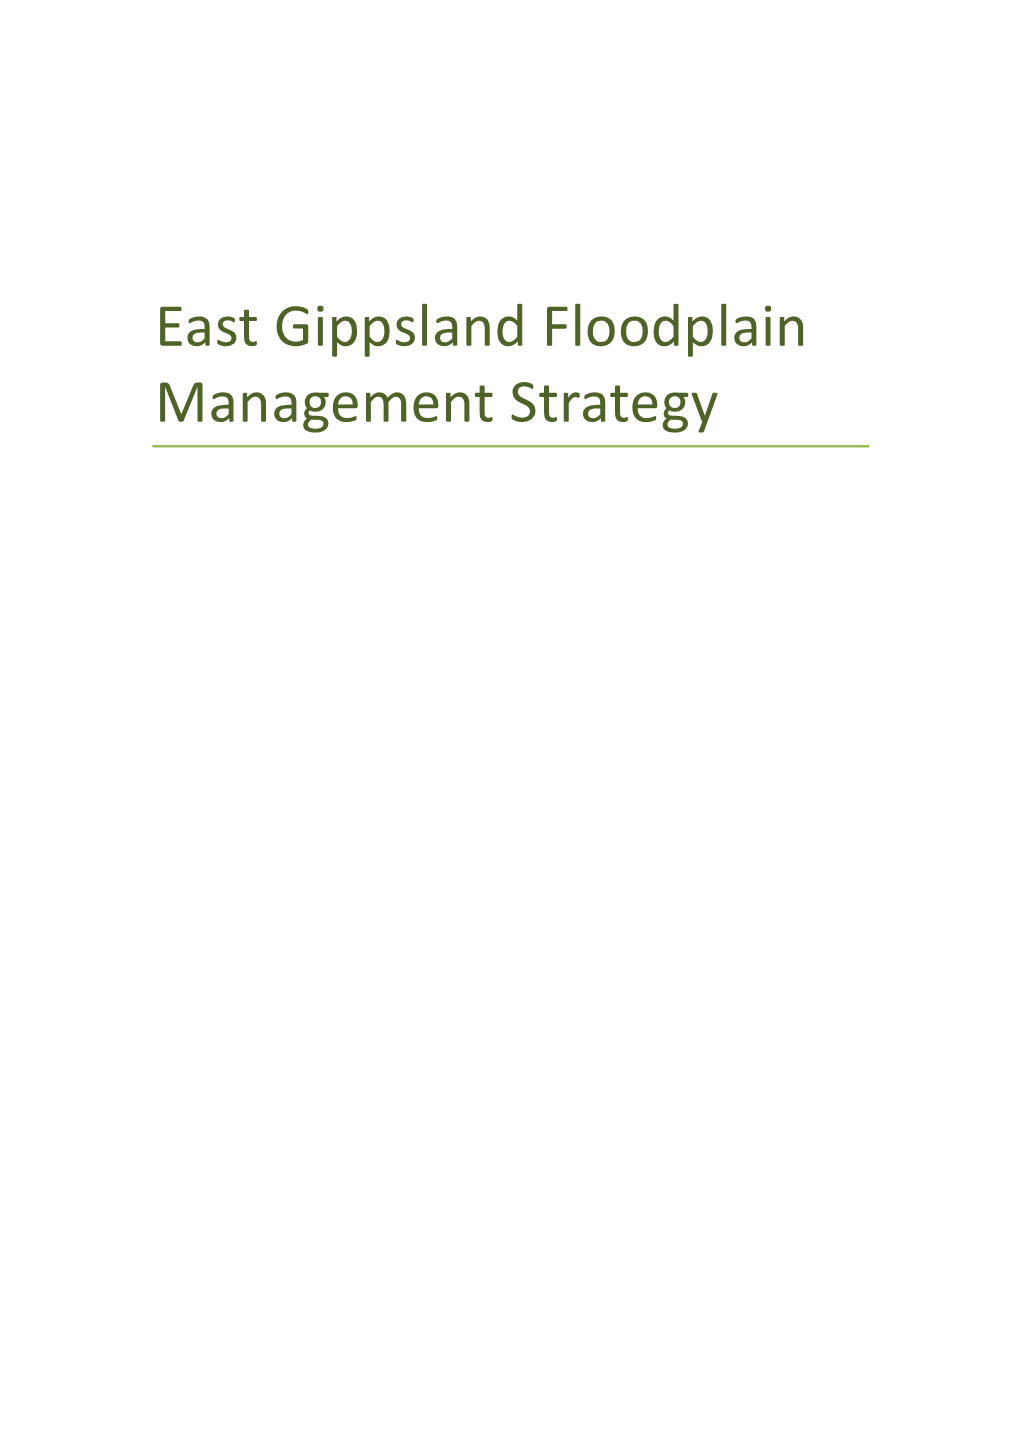 East Gippsland Regional Floodplain Management Strategy